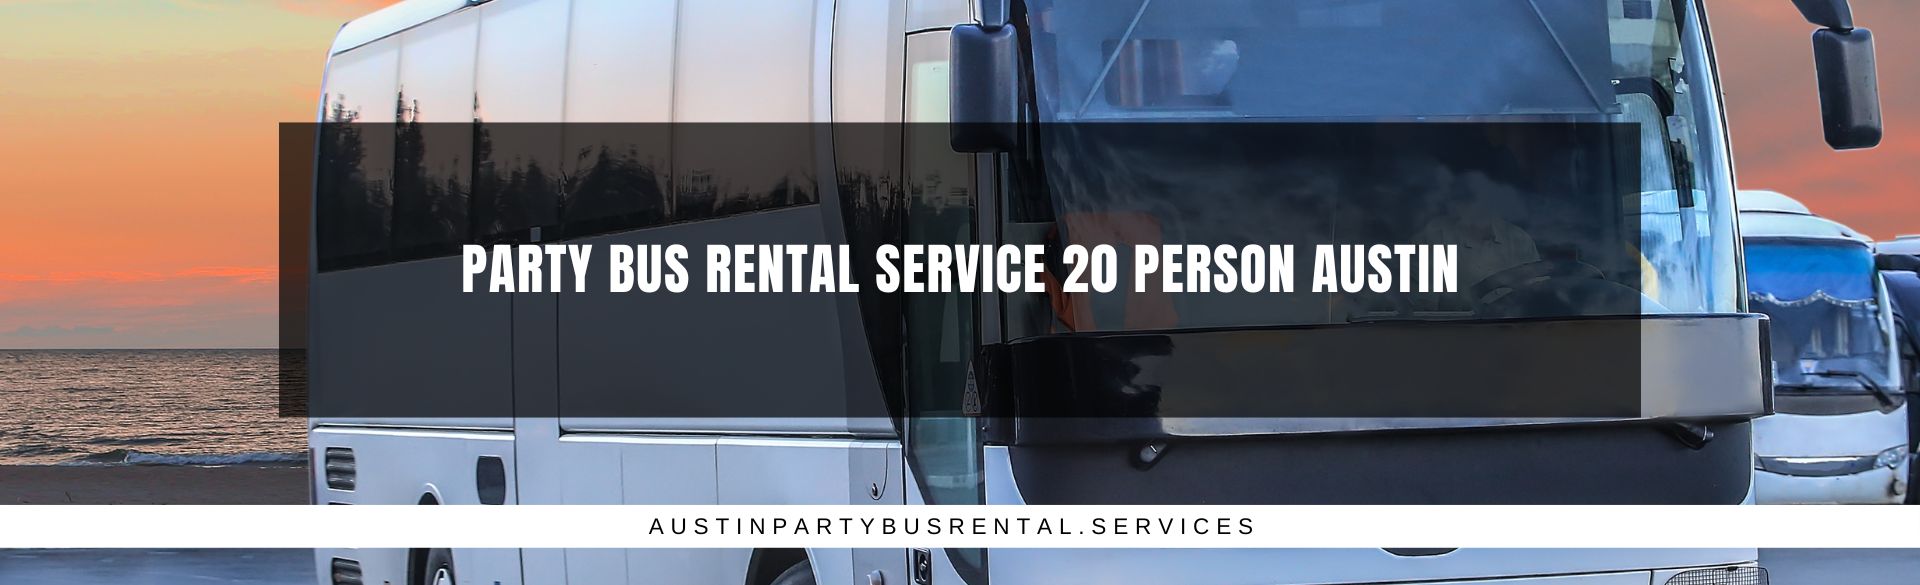 Party Bus Rental Service 20 Person Austin